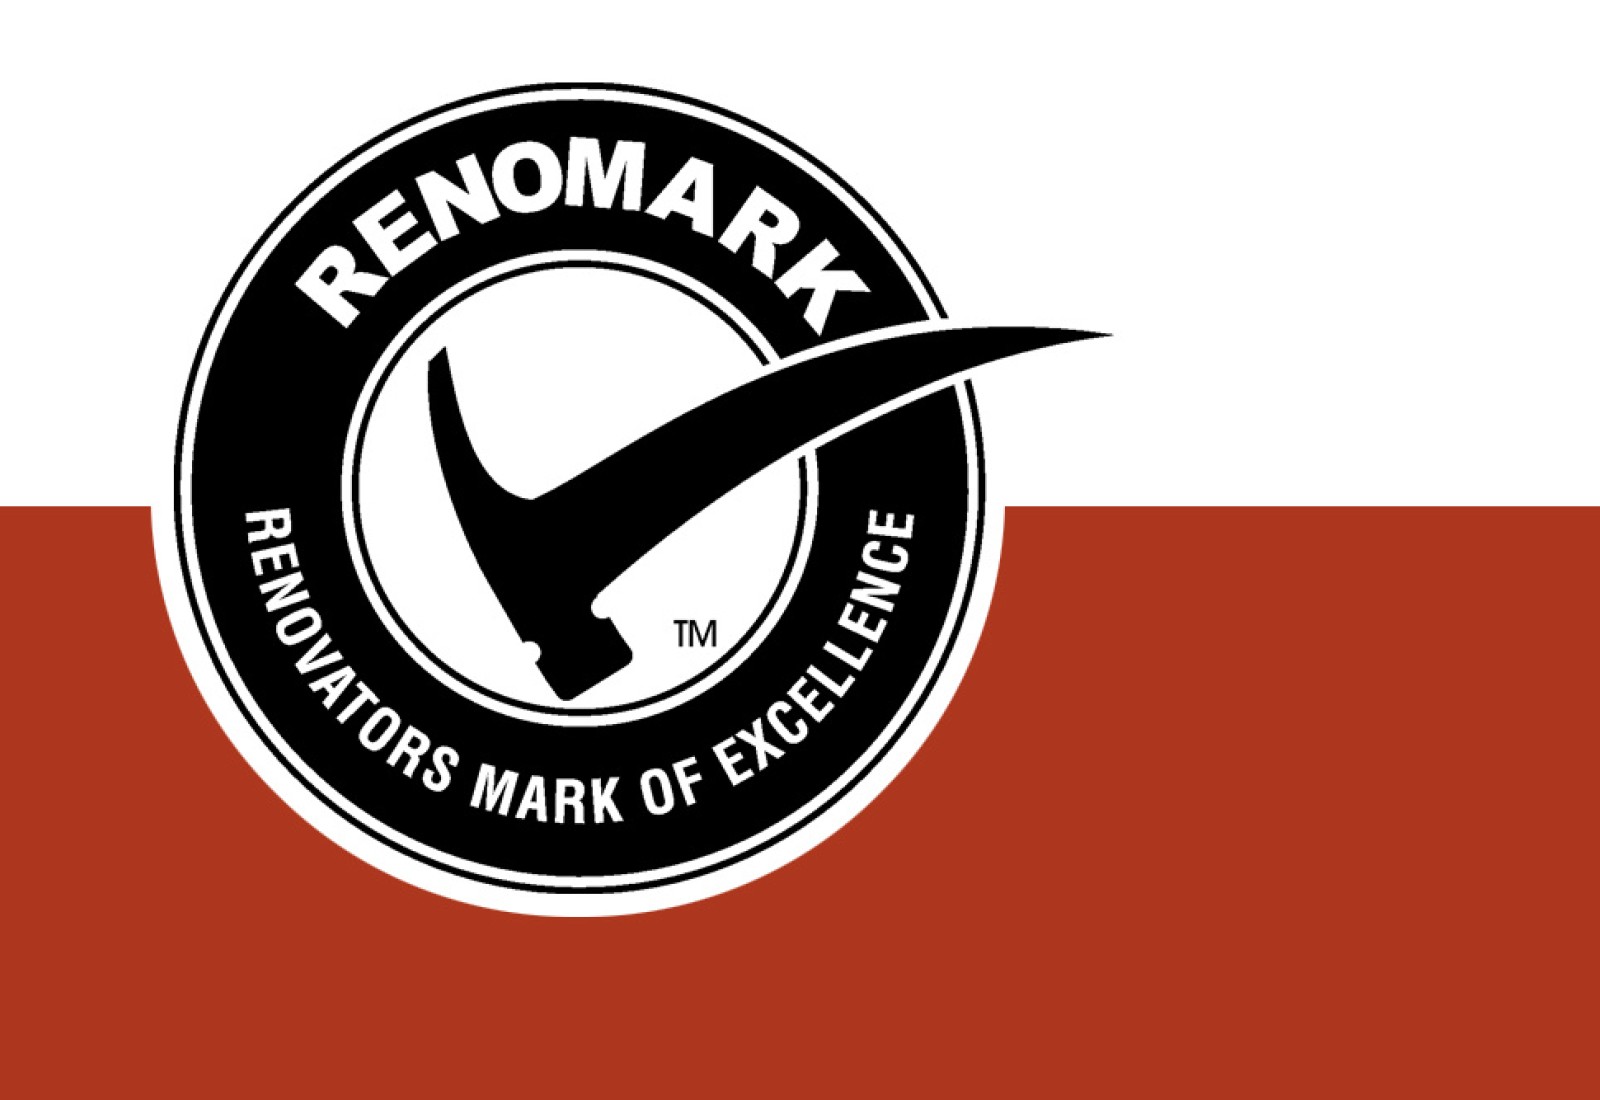 RenoMark™ - Renovators mark of excellence